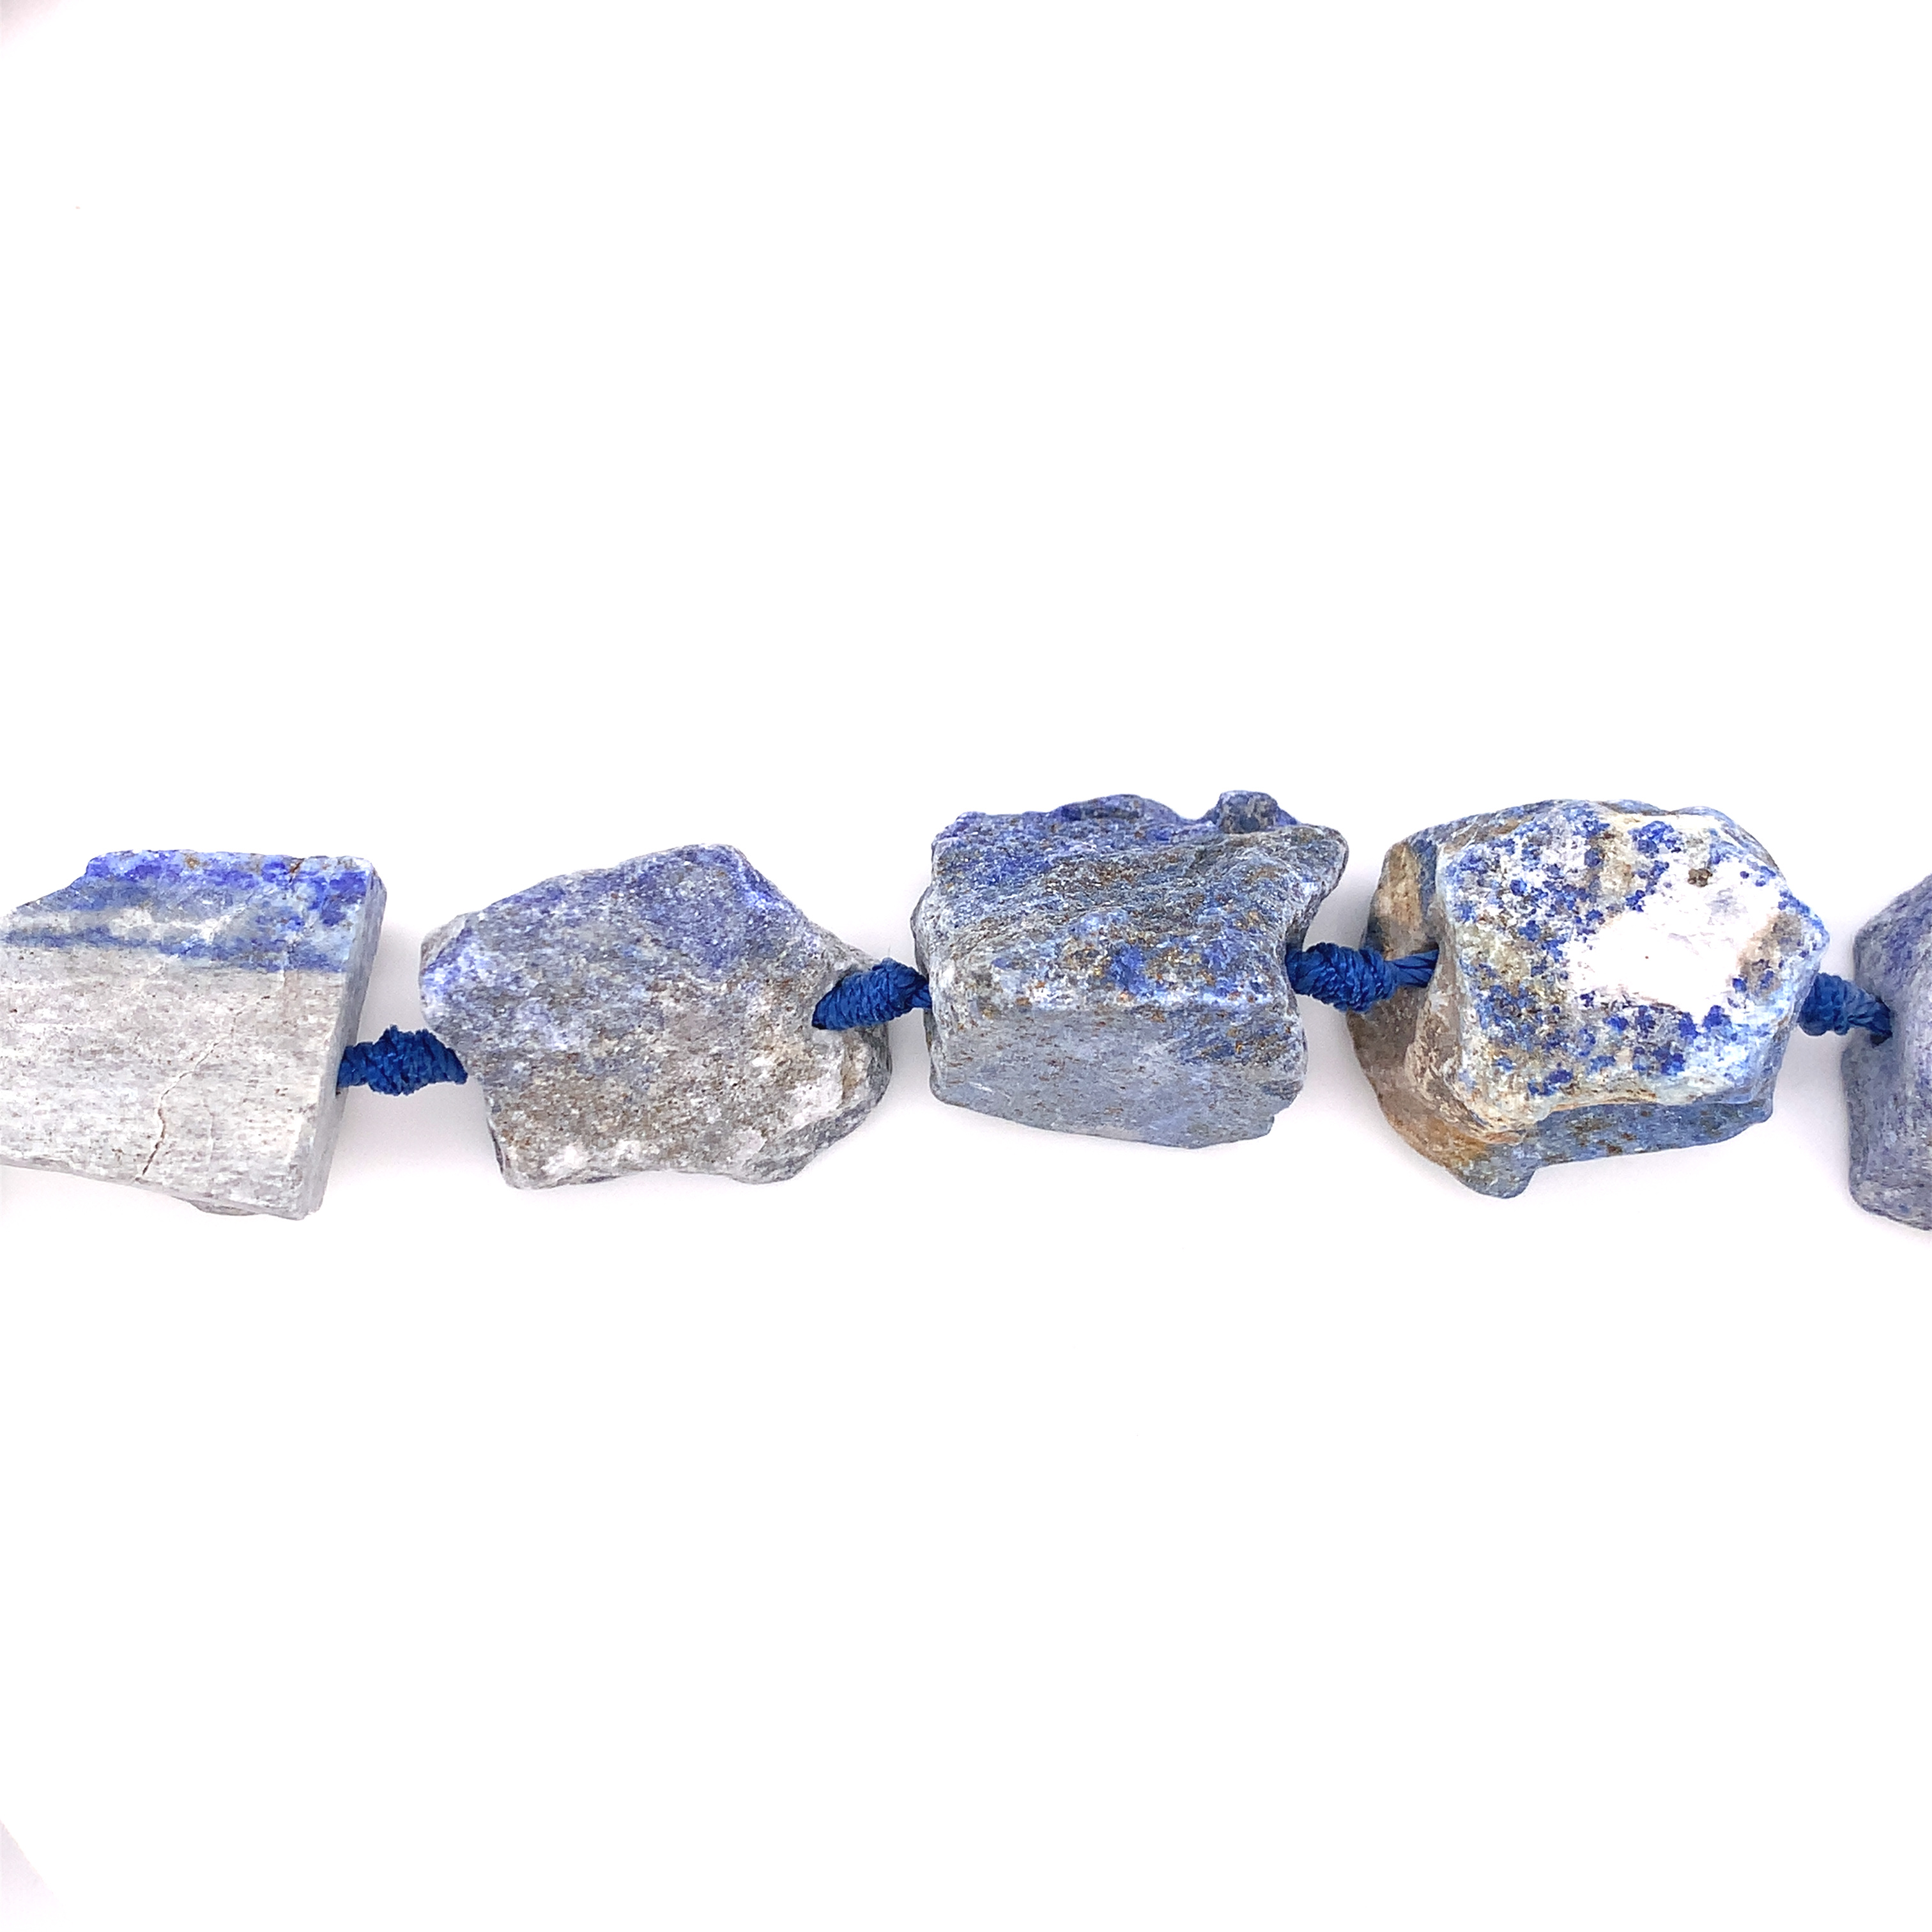 20-25mm Lapis Lazuli Rough Nugget